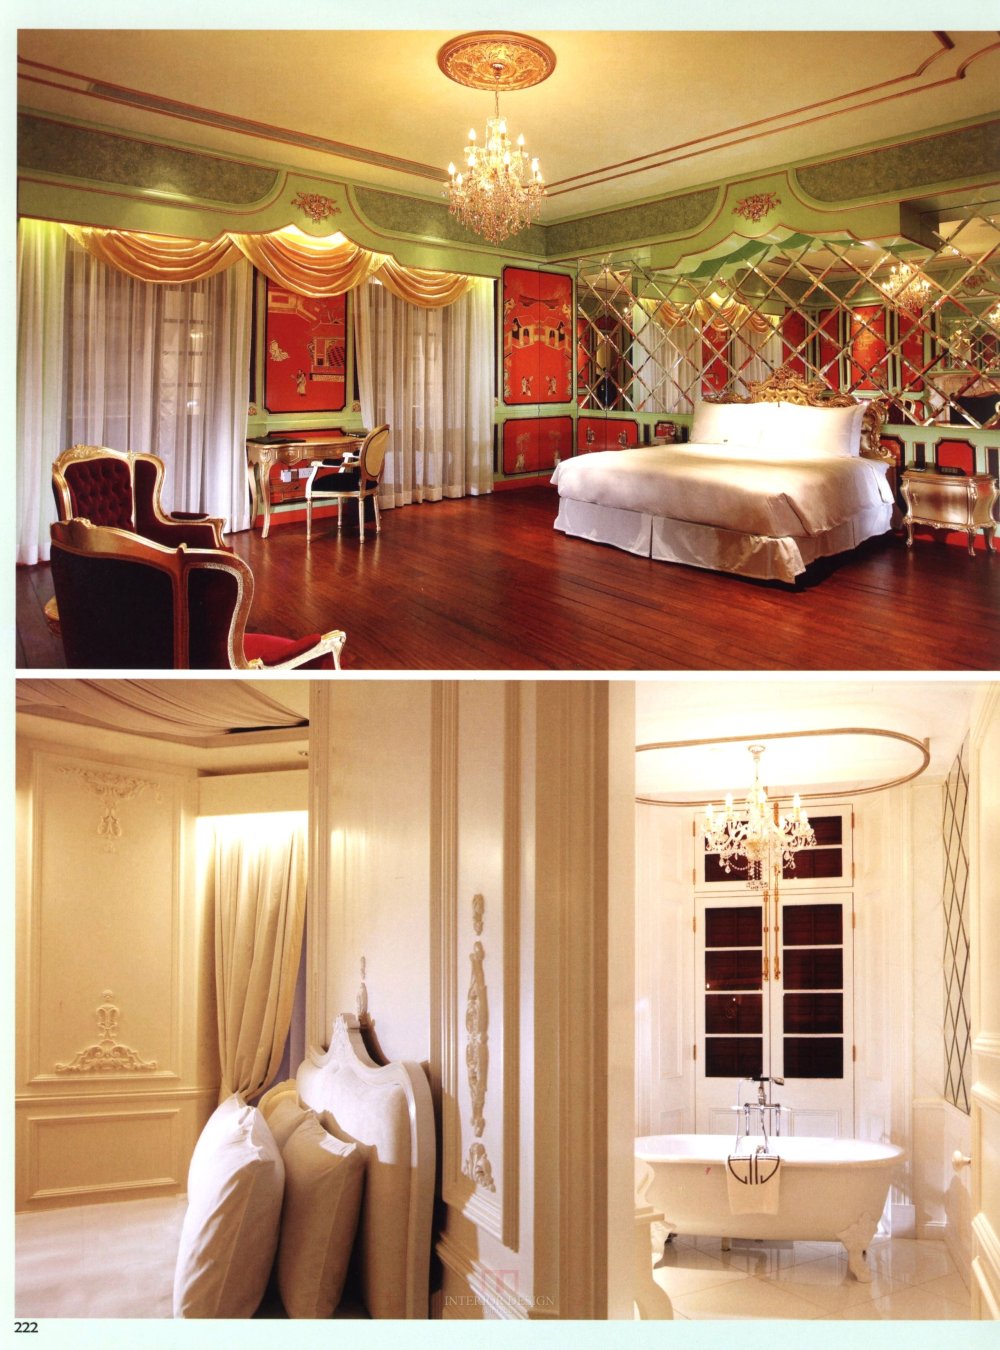 101全球酒店客房 101HOTELS GUEST ROOMS_图站_AiJpgg_com_217.jpg